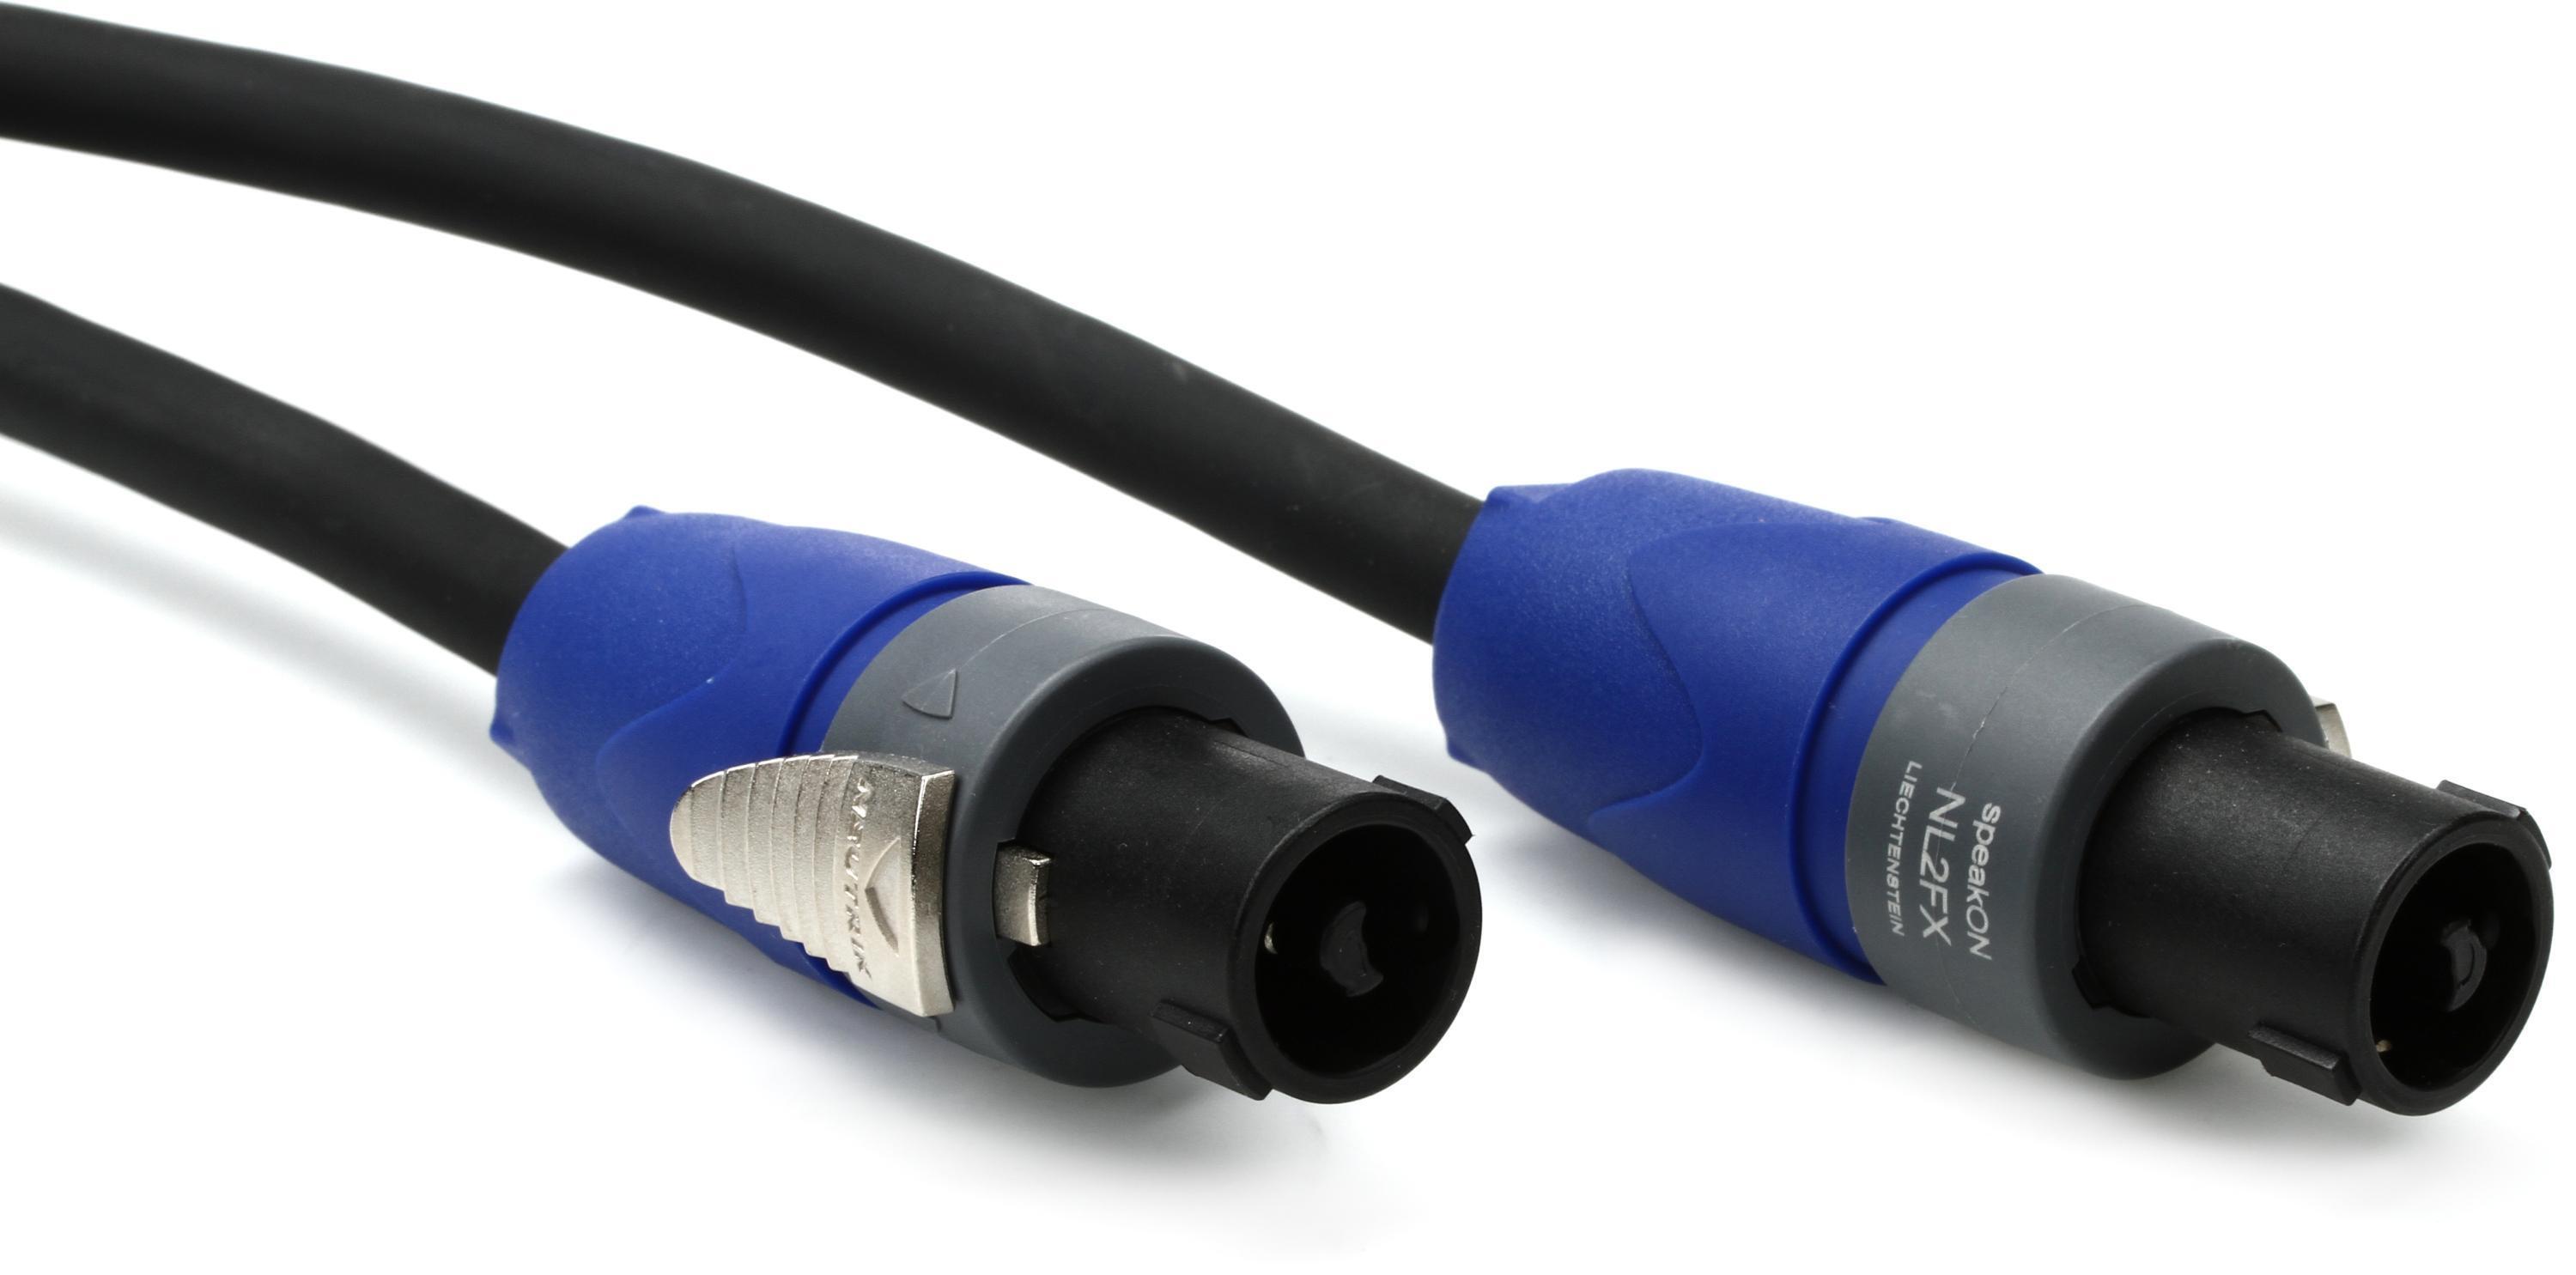 Bundled Item: Pro Co S12NN Speaker Cable - speakON to speakON - 50 foot